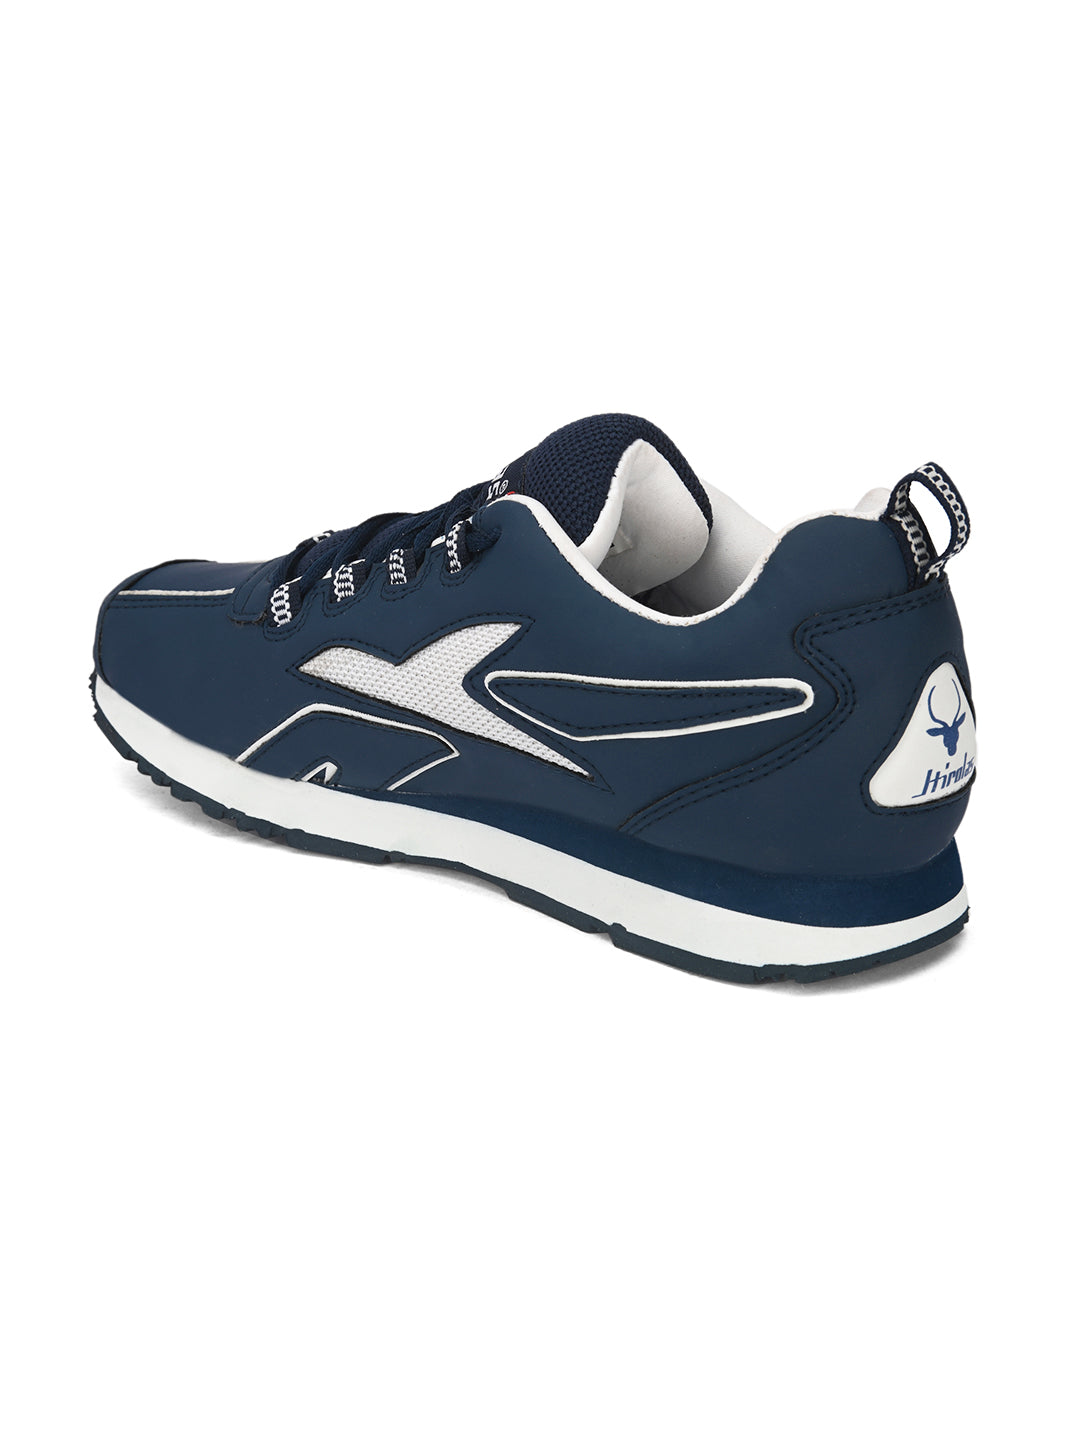 Hirolas® Men's Multisports Shock Absorbing Walking Running Fitness Athletic Training Gym Blue Lace Up Sneaker Sport Shoes (HRL2089BLU)